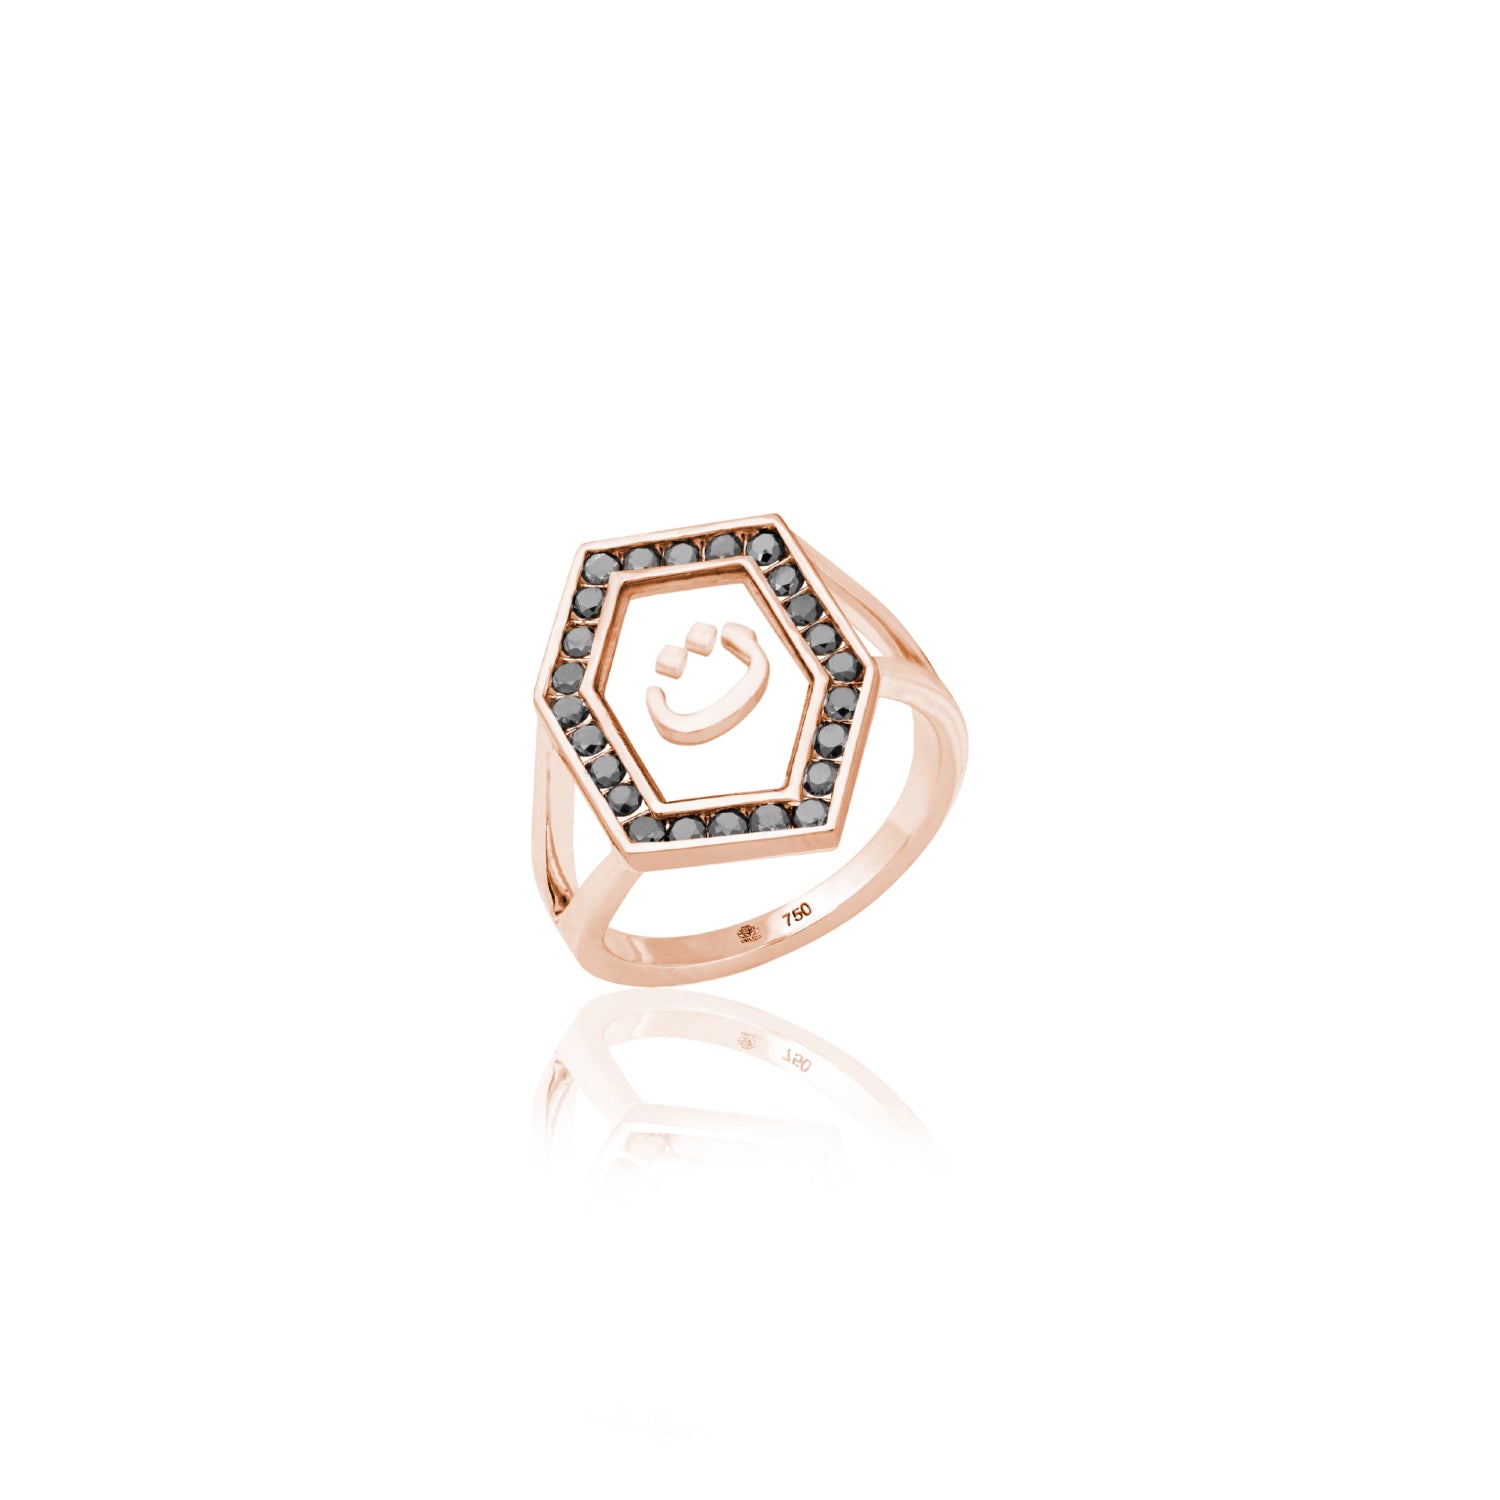 Qamoos 1.0 Letter ت Black Diamond Ring in Rose Gold